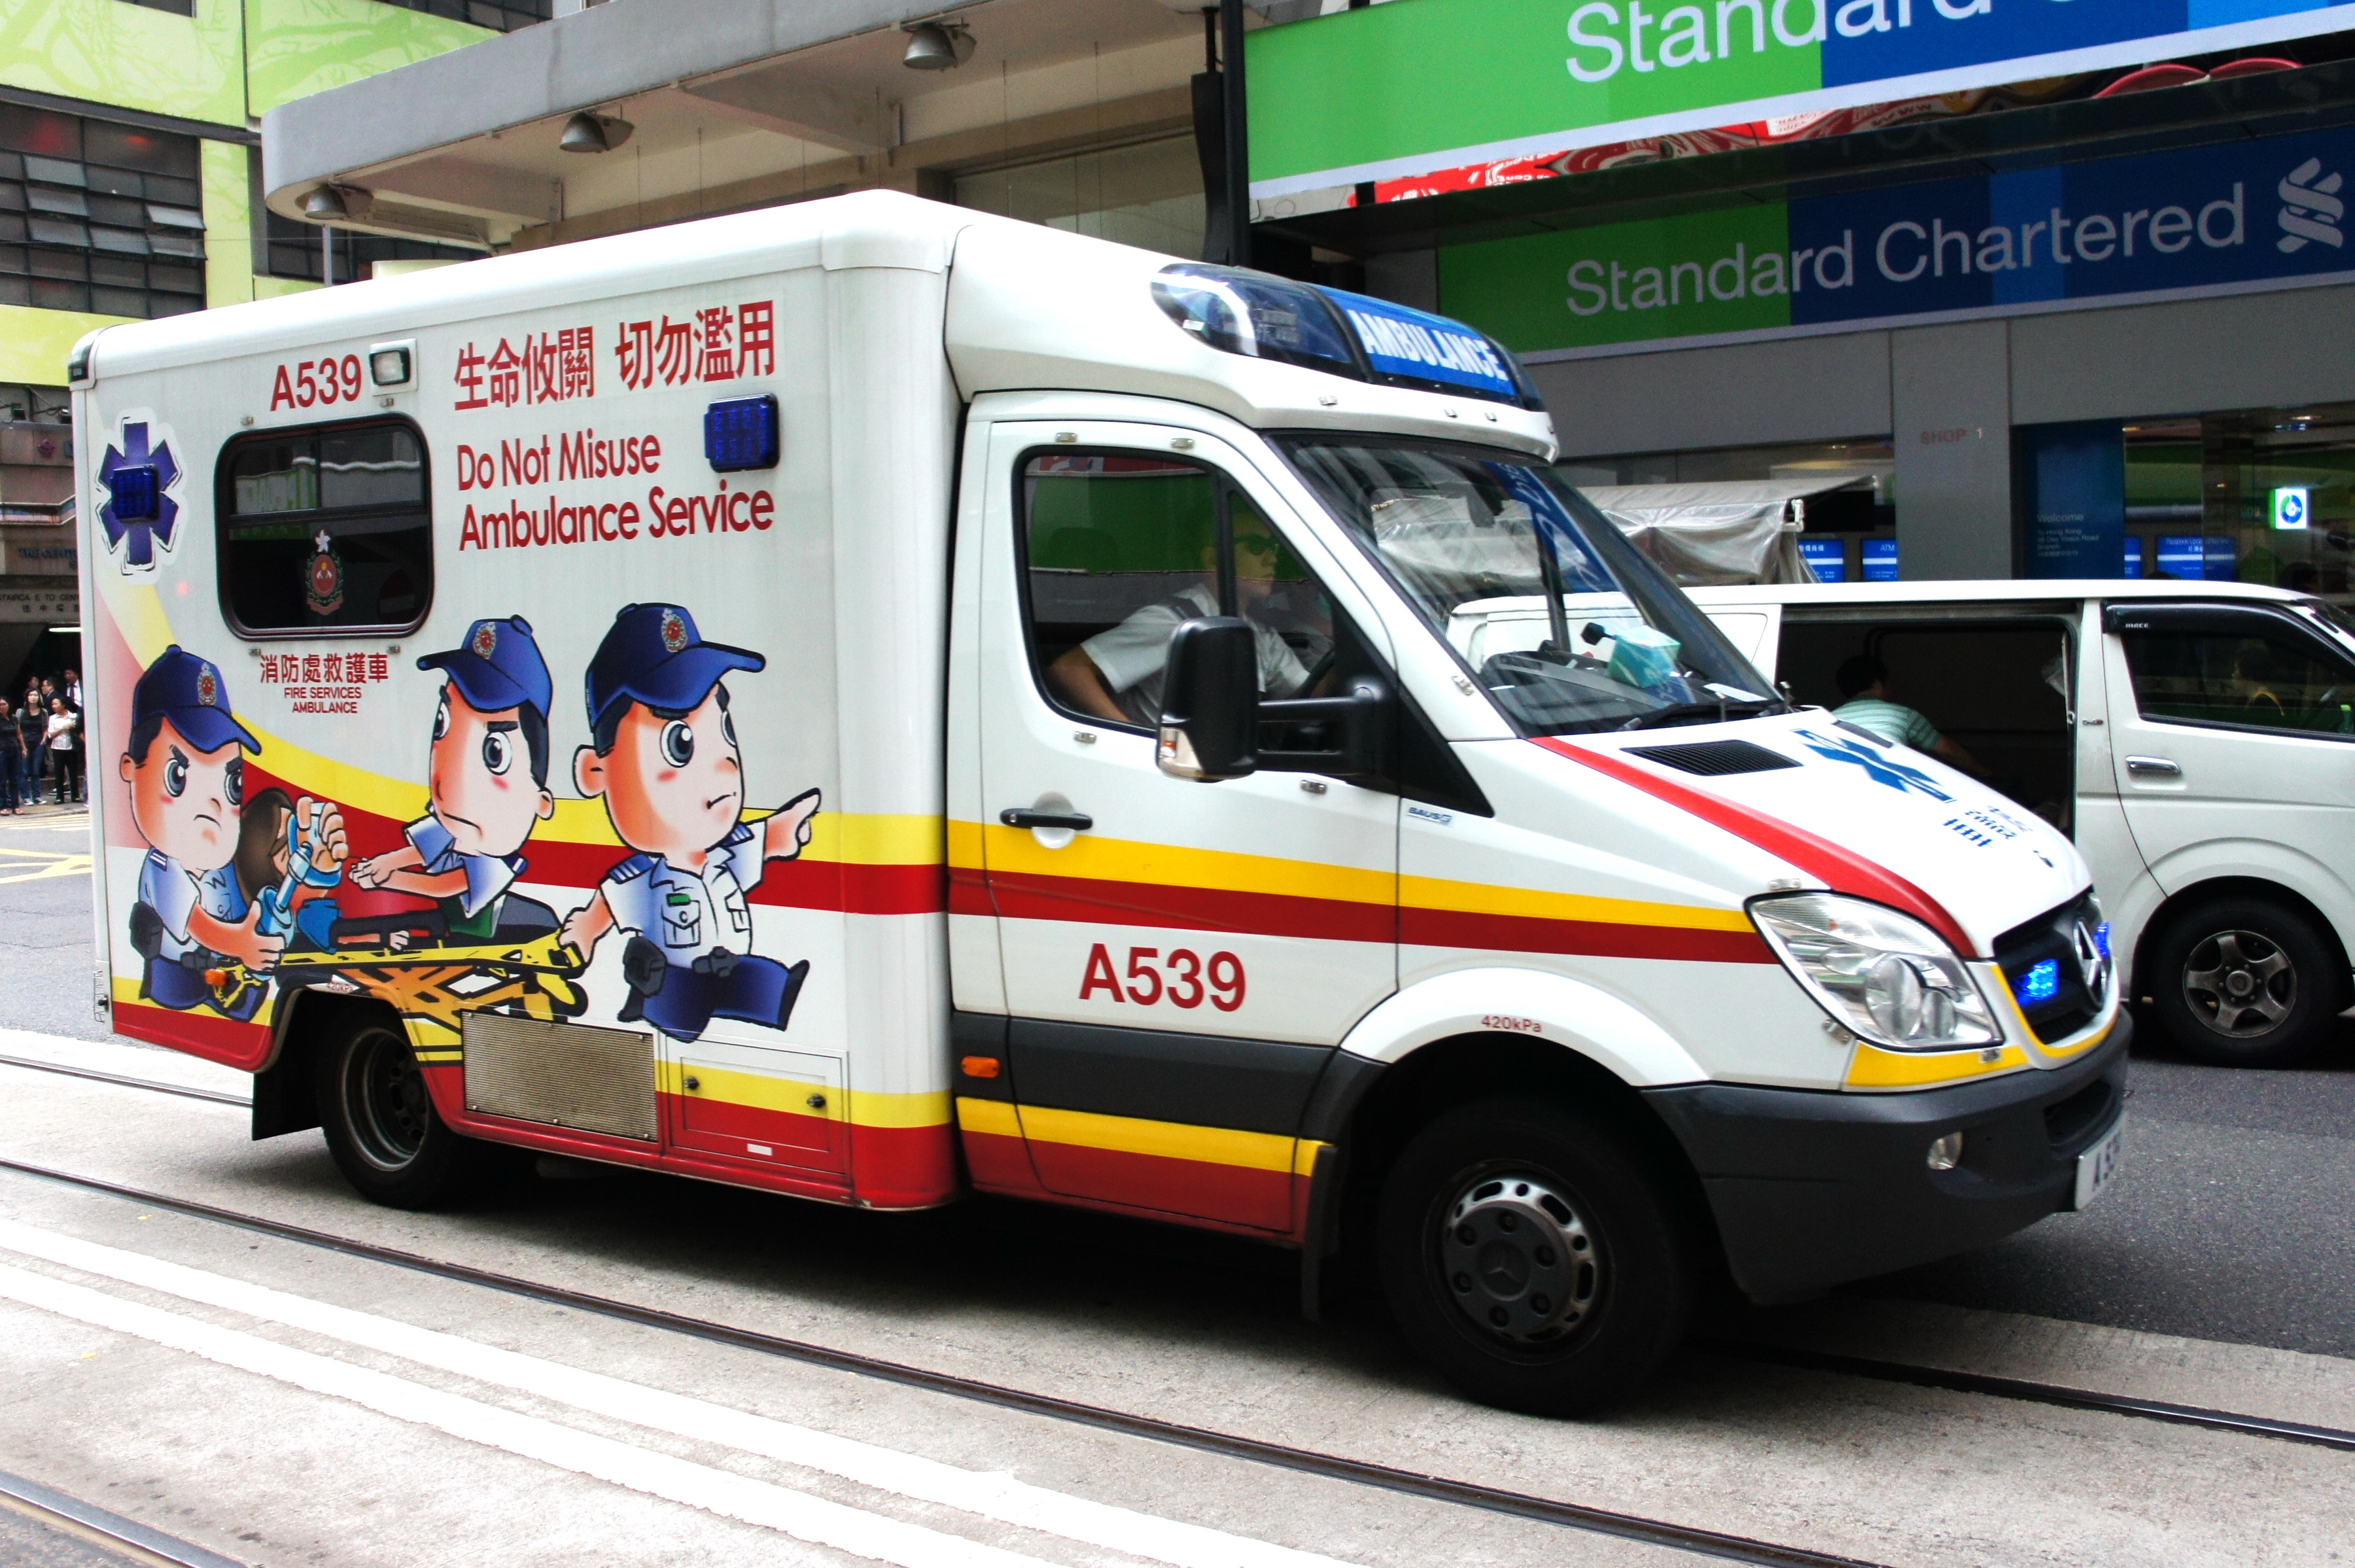 emergency services, ambulance service